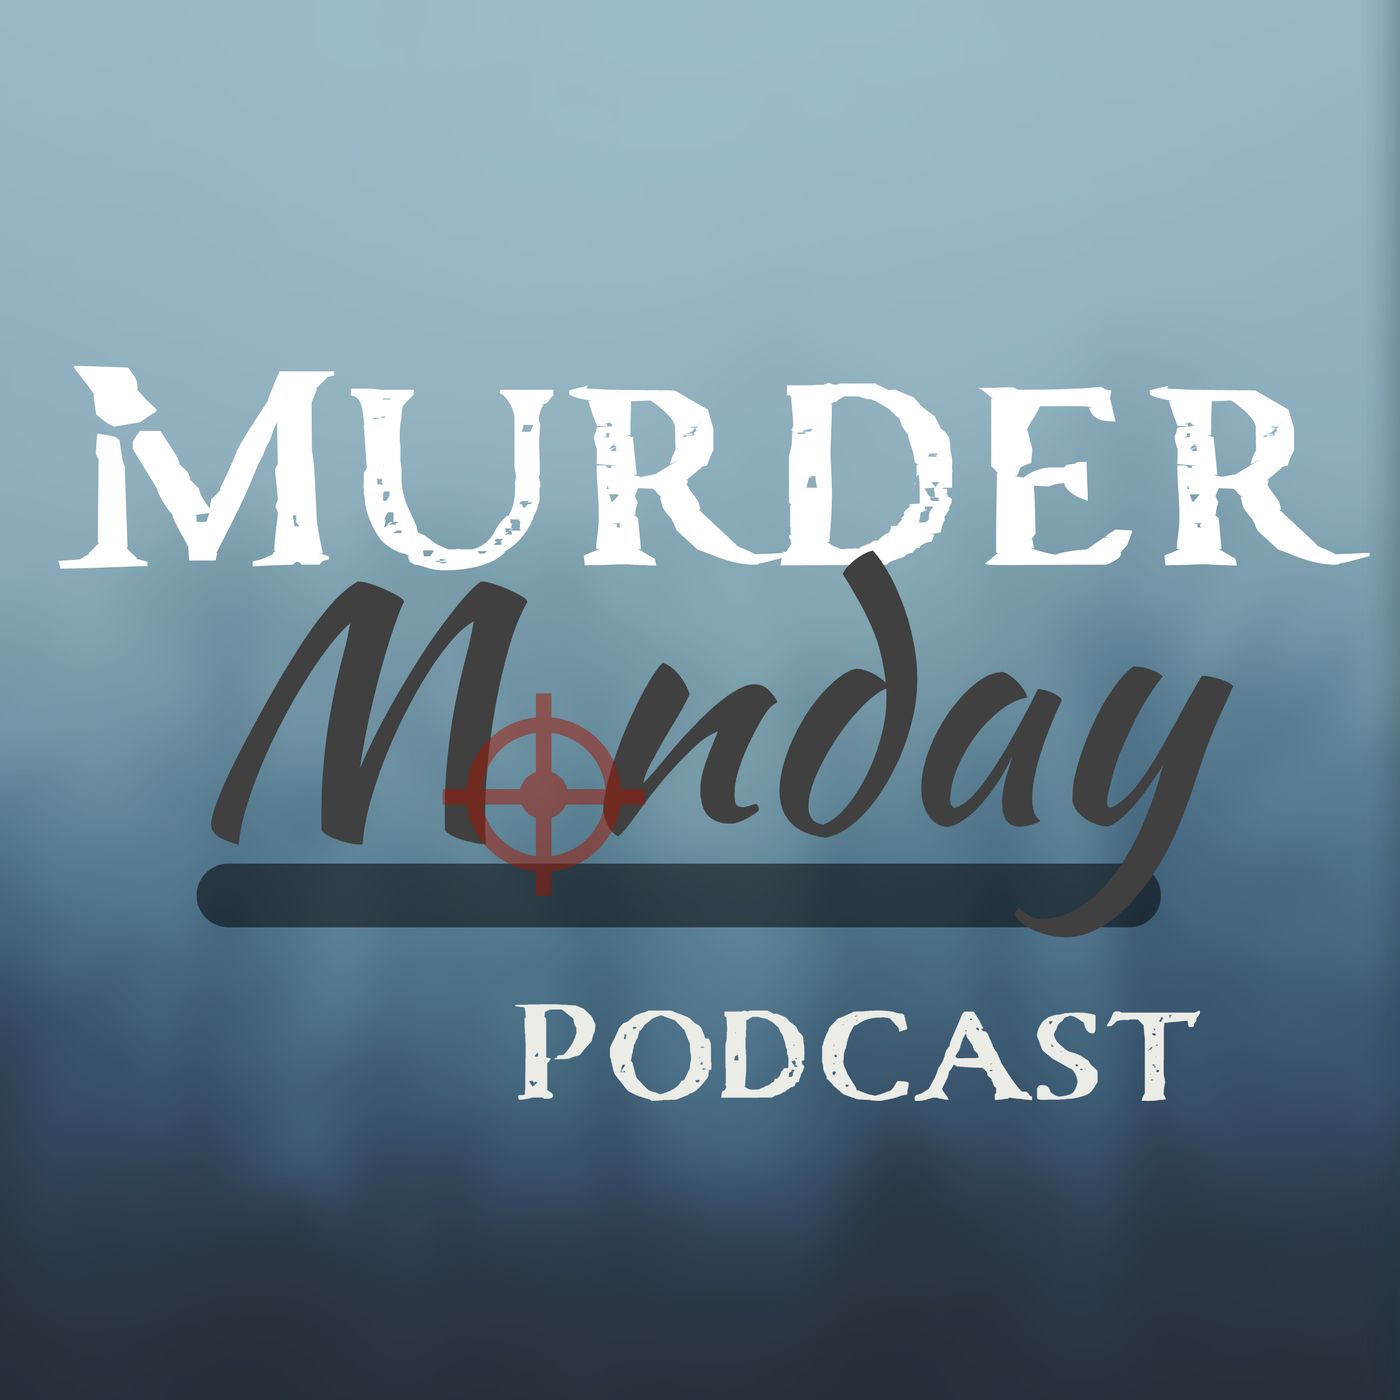 Murder Monday Podcast